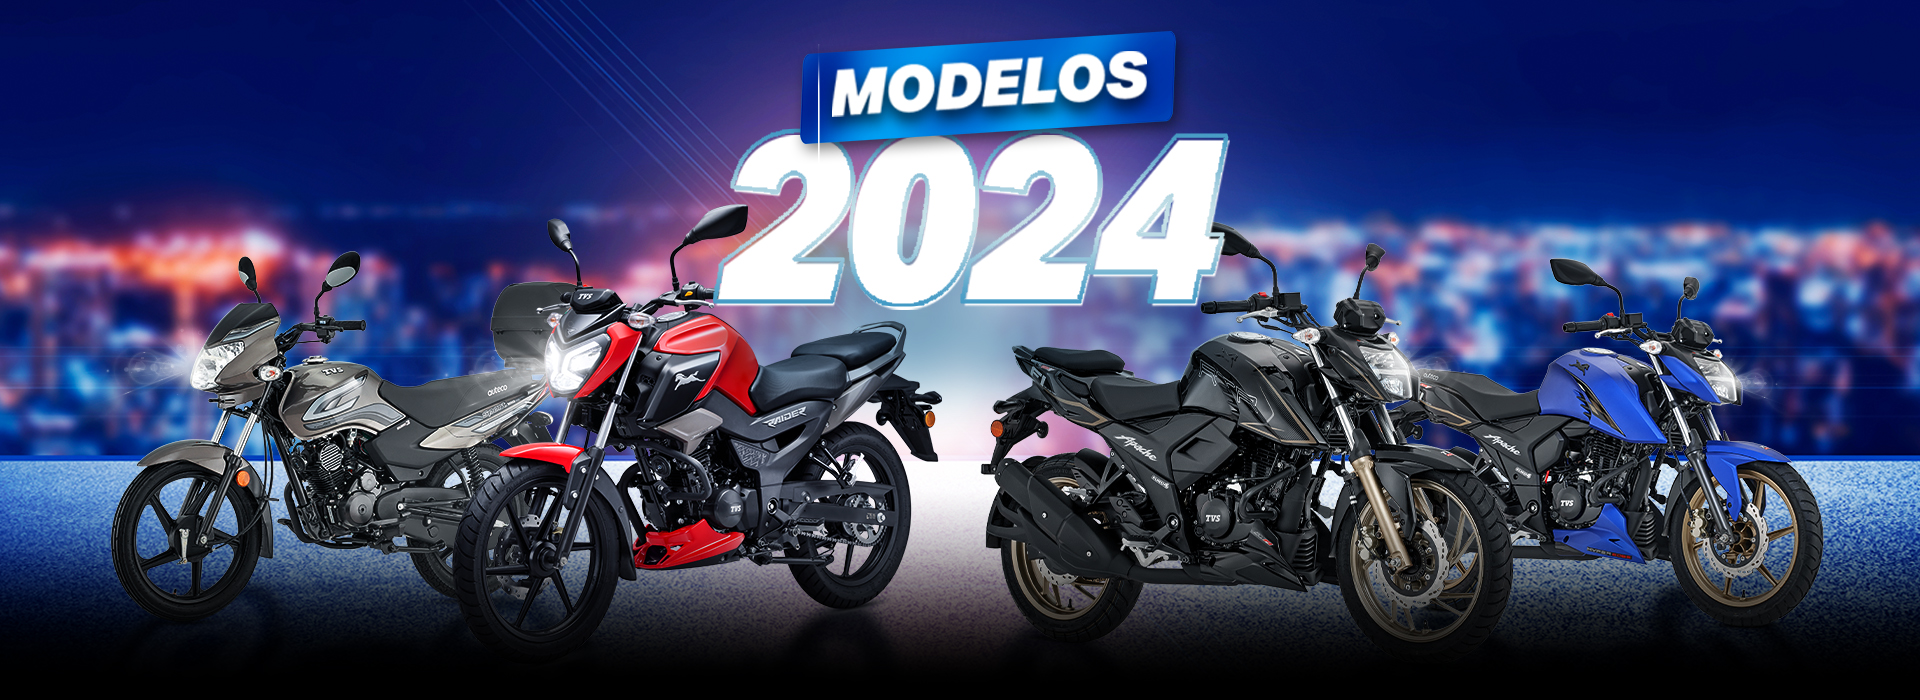 Modelos-2024